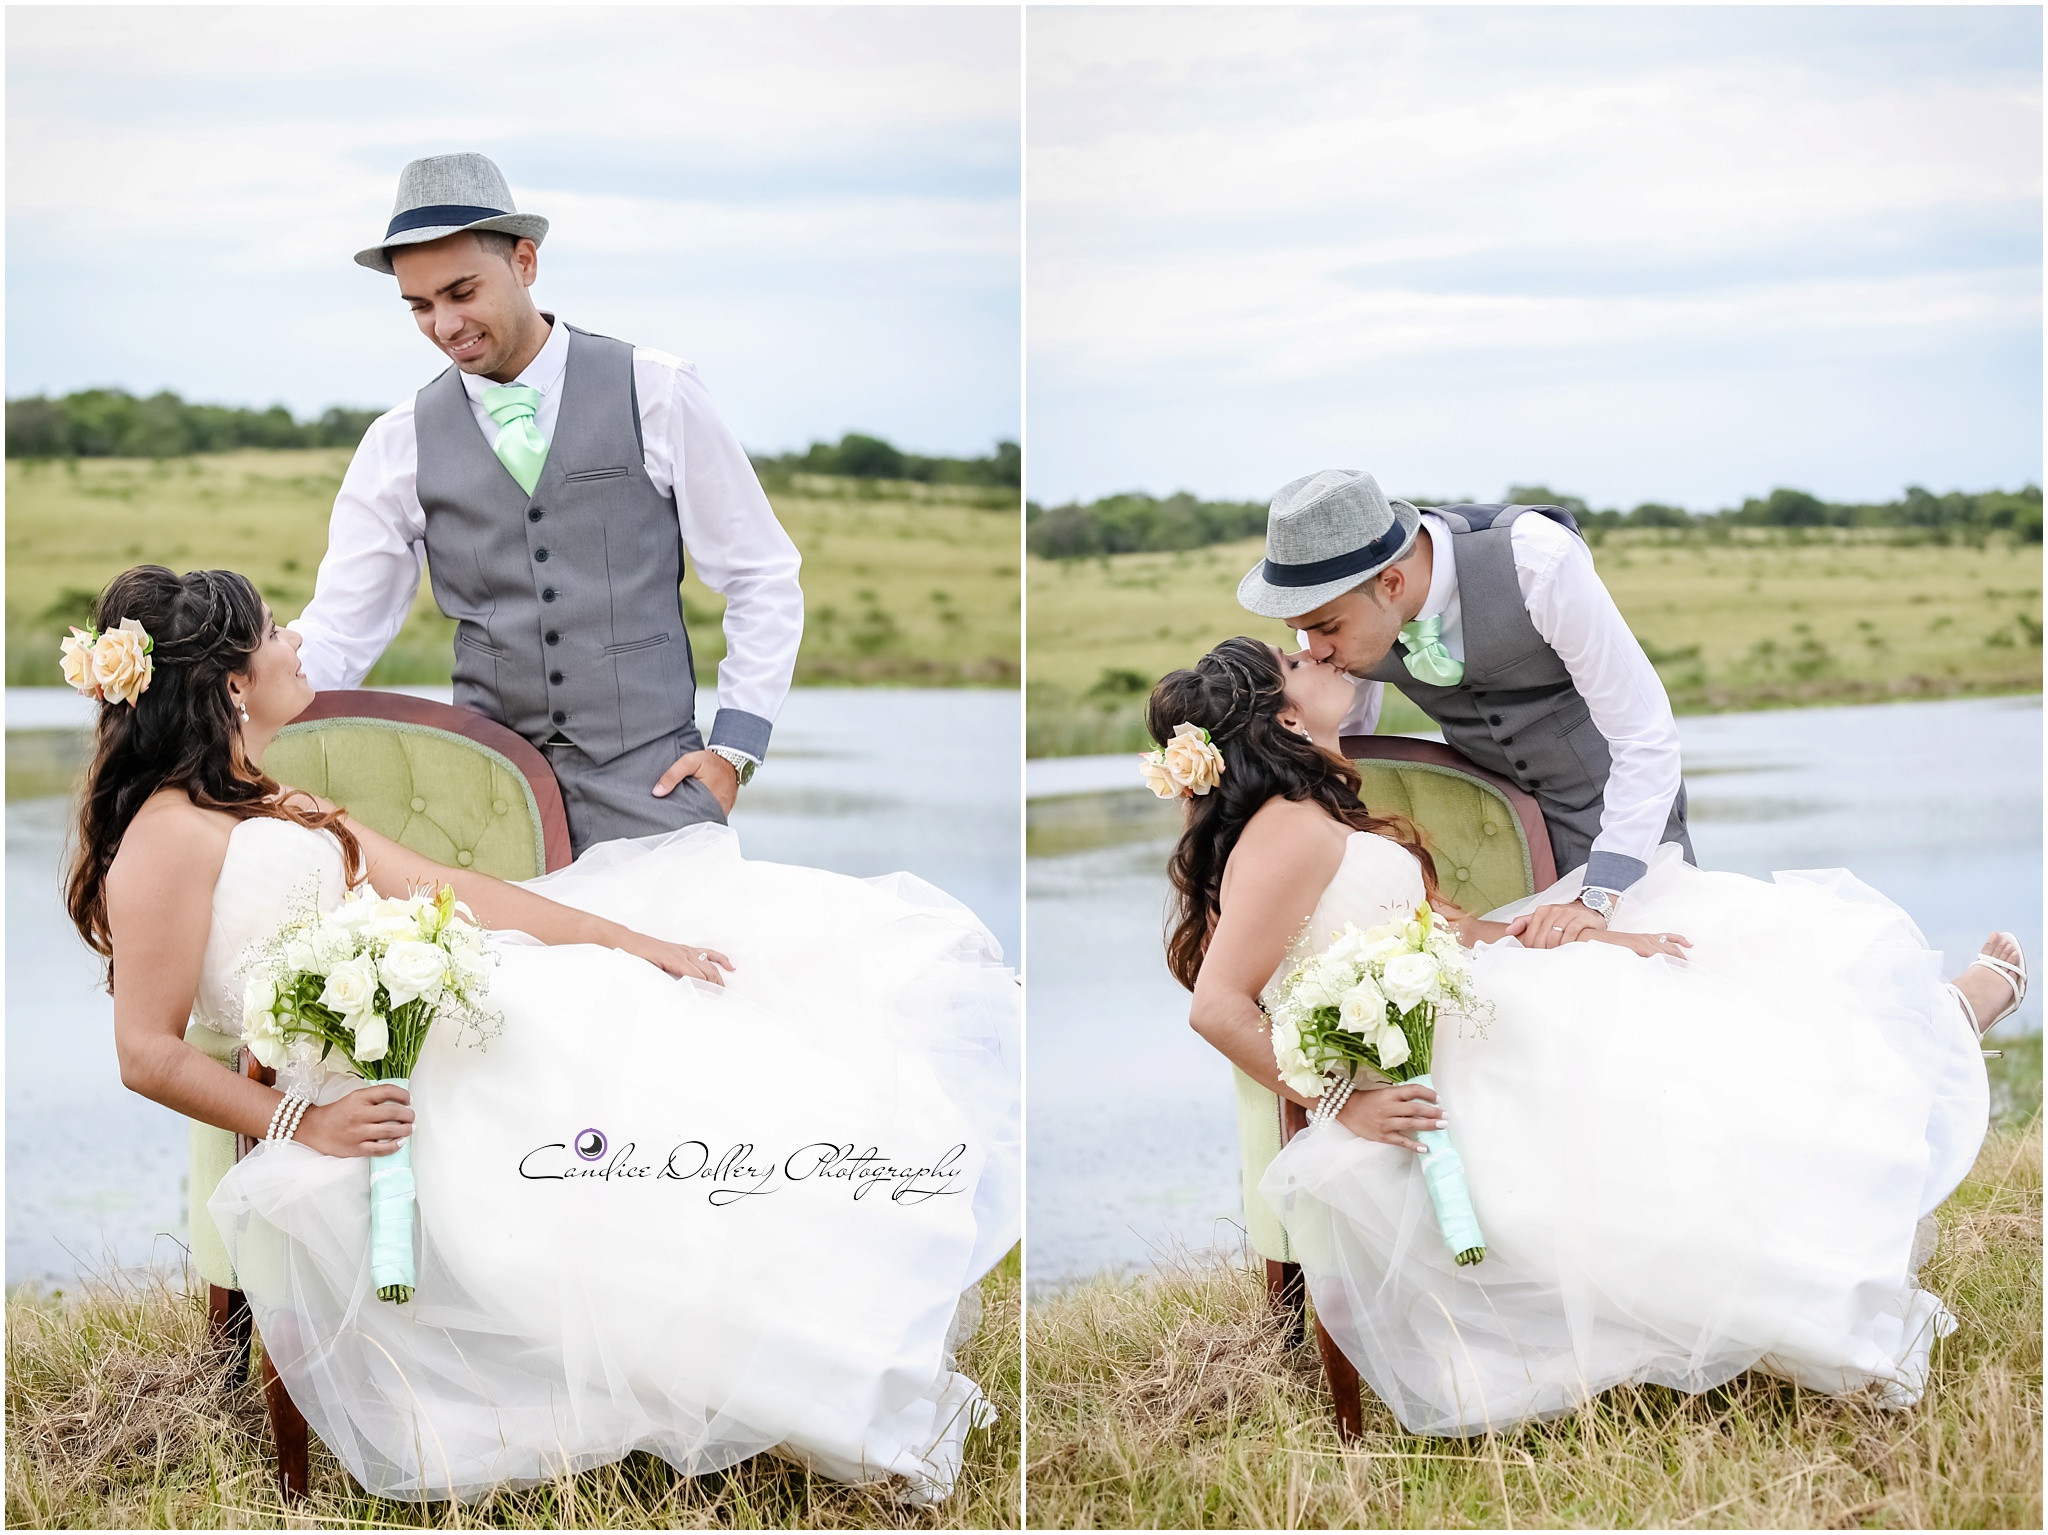 Paula & Jaycee's Wedding - Cypress Dale - Candice Dollery Photography_3104